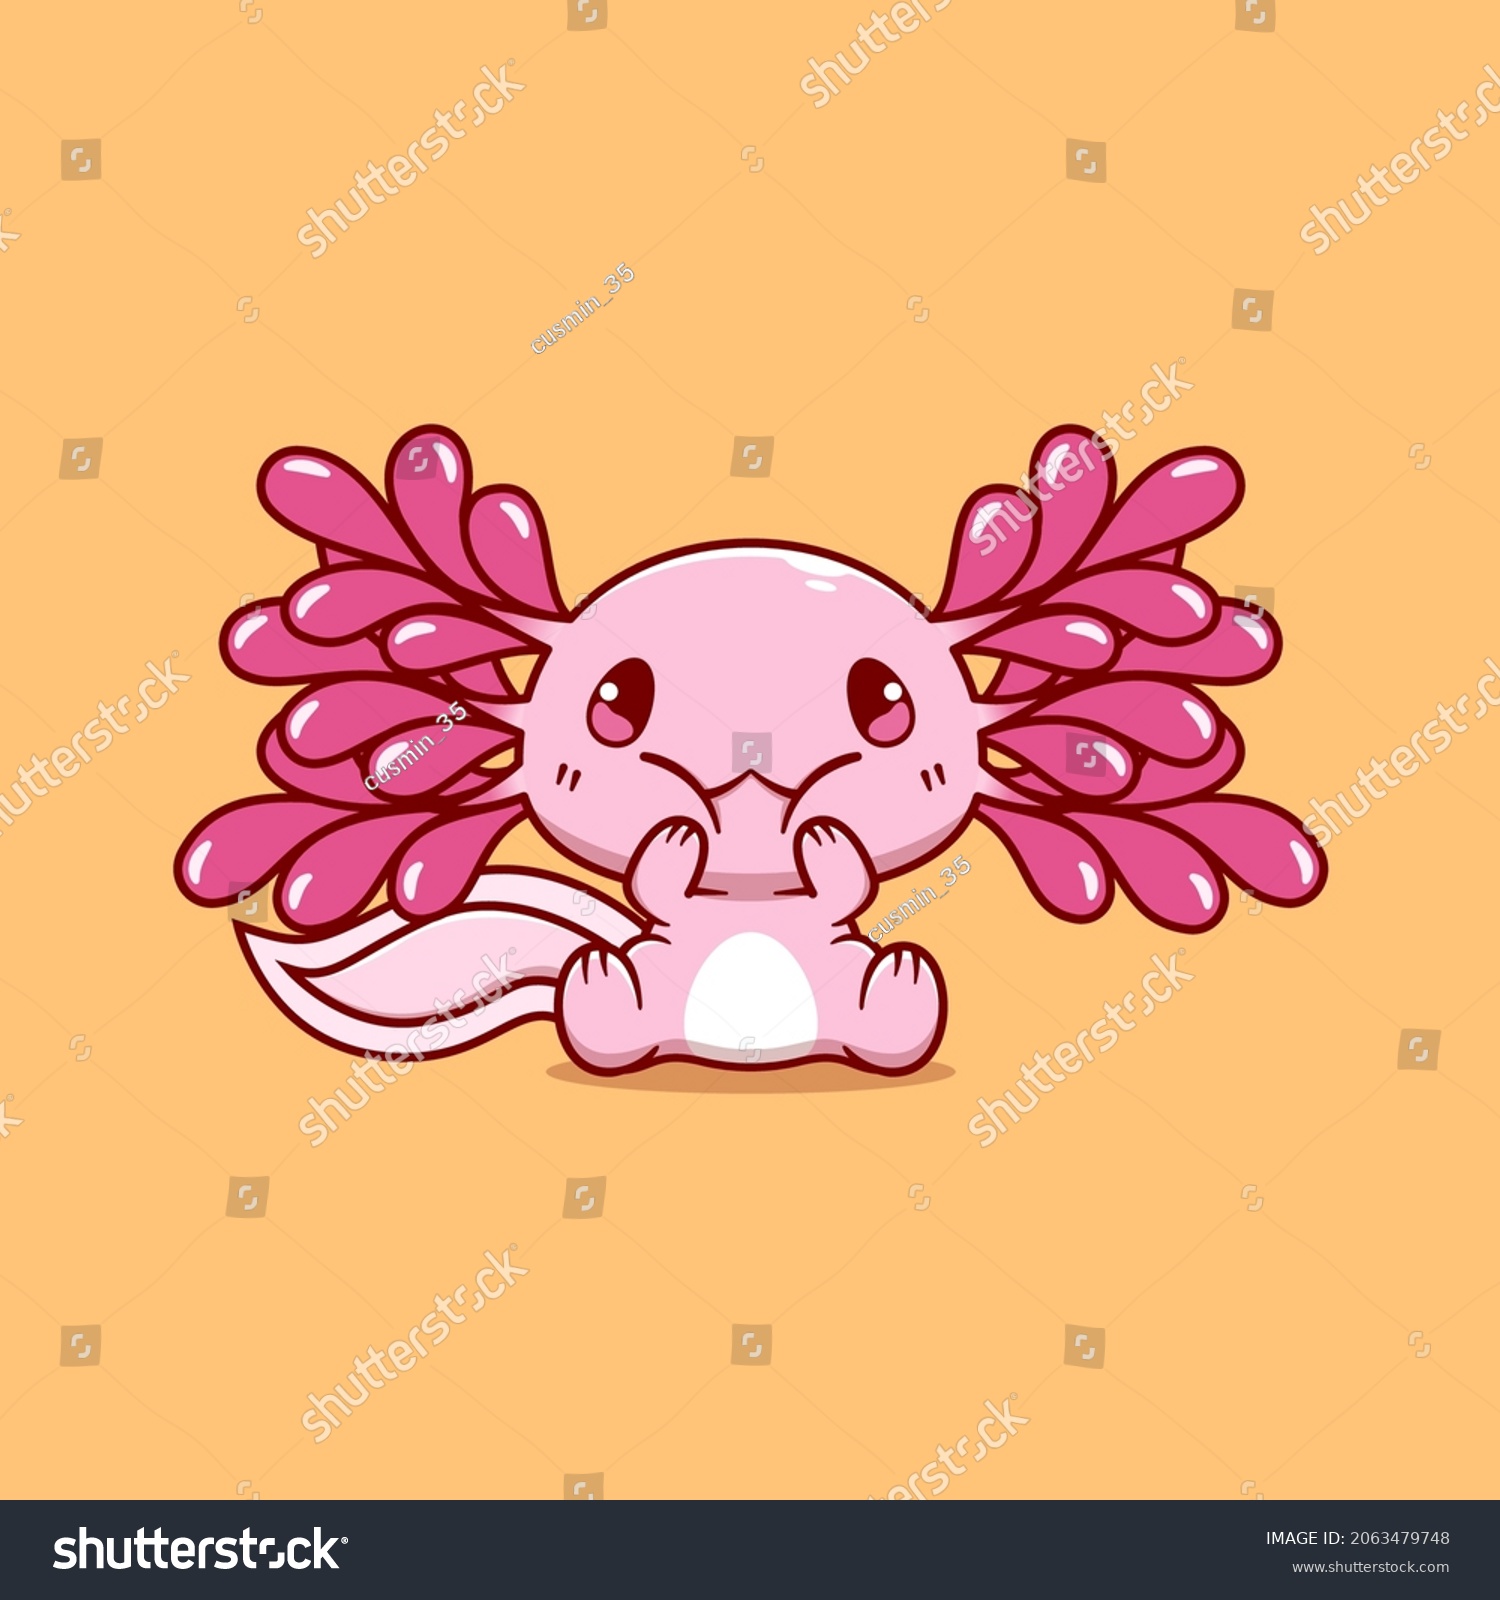 Cute Axolotl Images Stock Photos Vectors Shutterstock